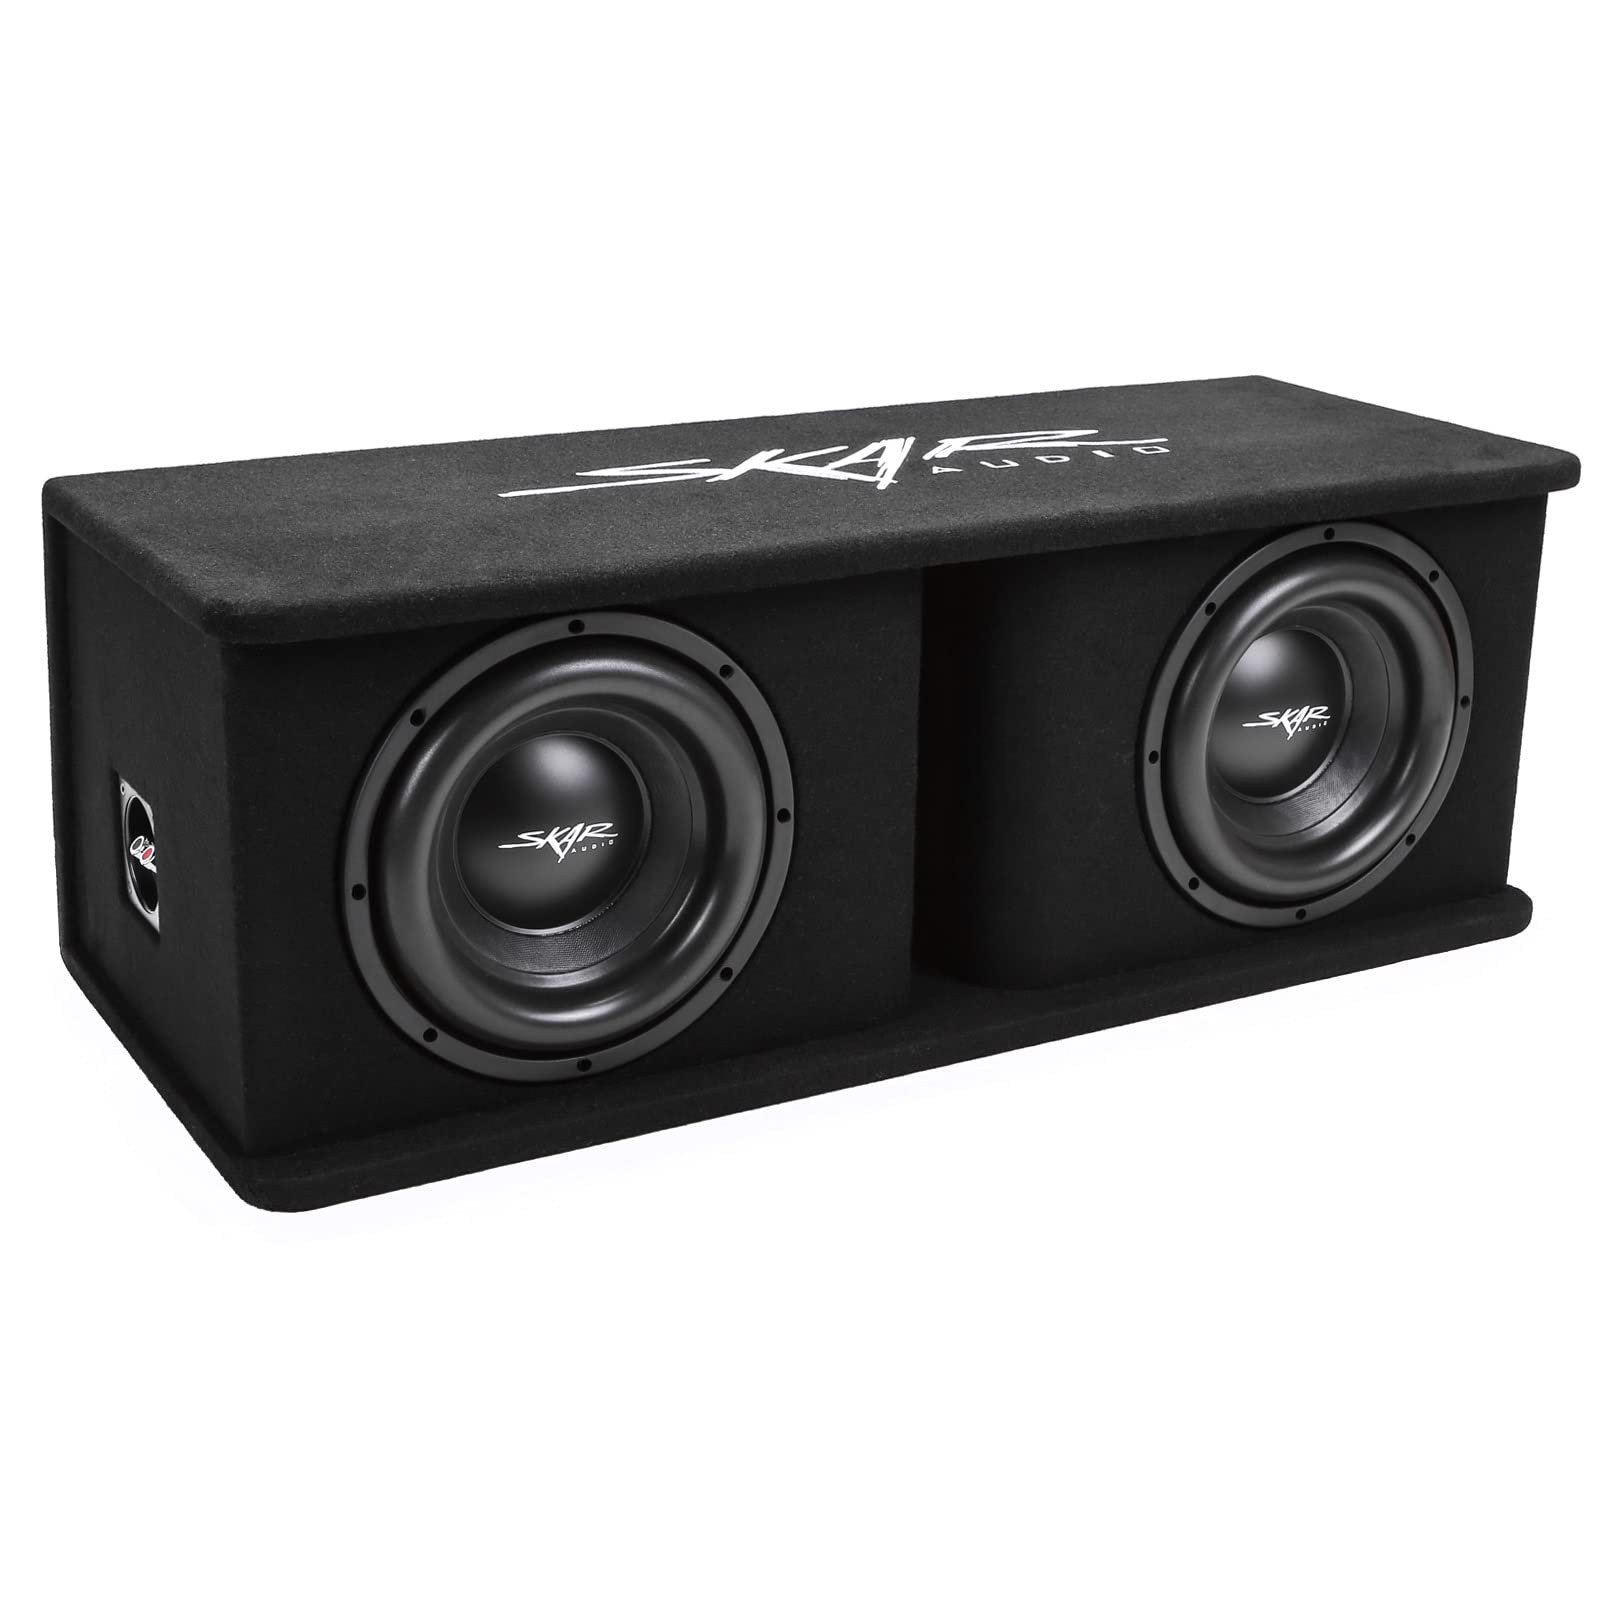 Skar Audio 2400W Sdr Series Vented Subwoofer Enclosure | SDR-2X10D4, Dual 10" D4 Loaded